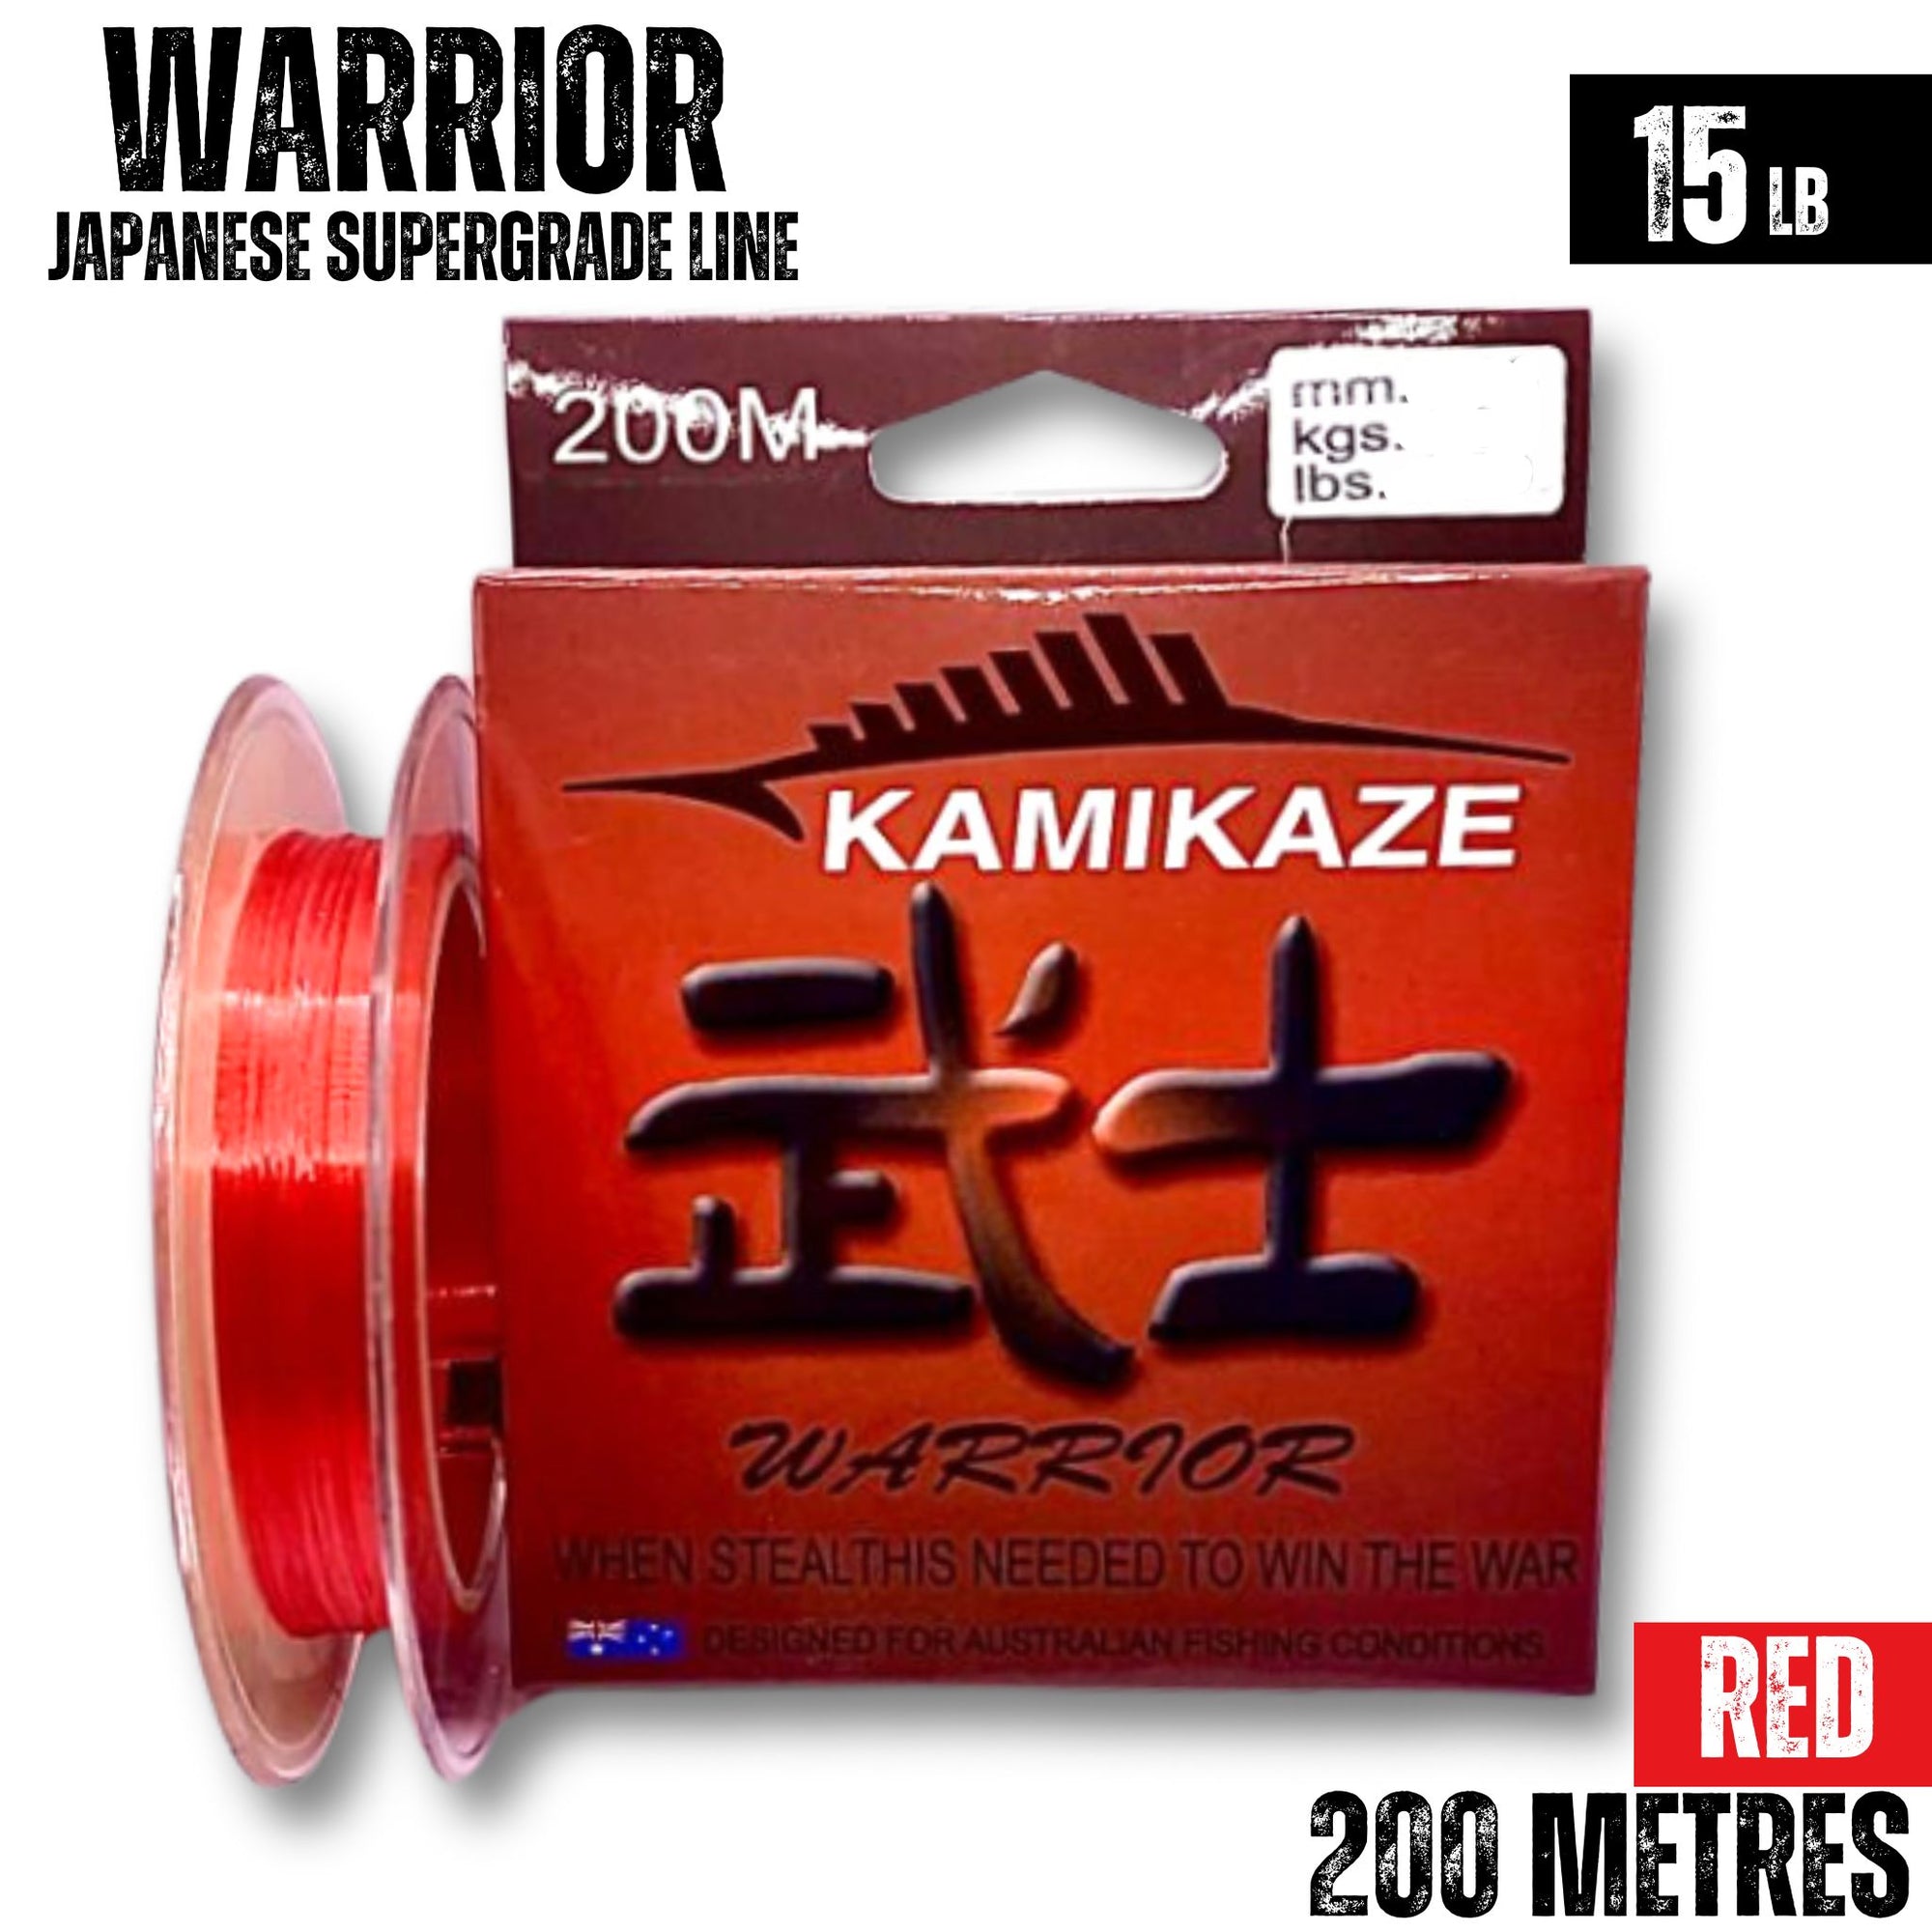 Kamikaze WARRIOR Japanese SuperGradeLine 200m 15lb RED - South East Clearance Centre